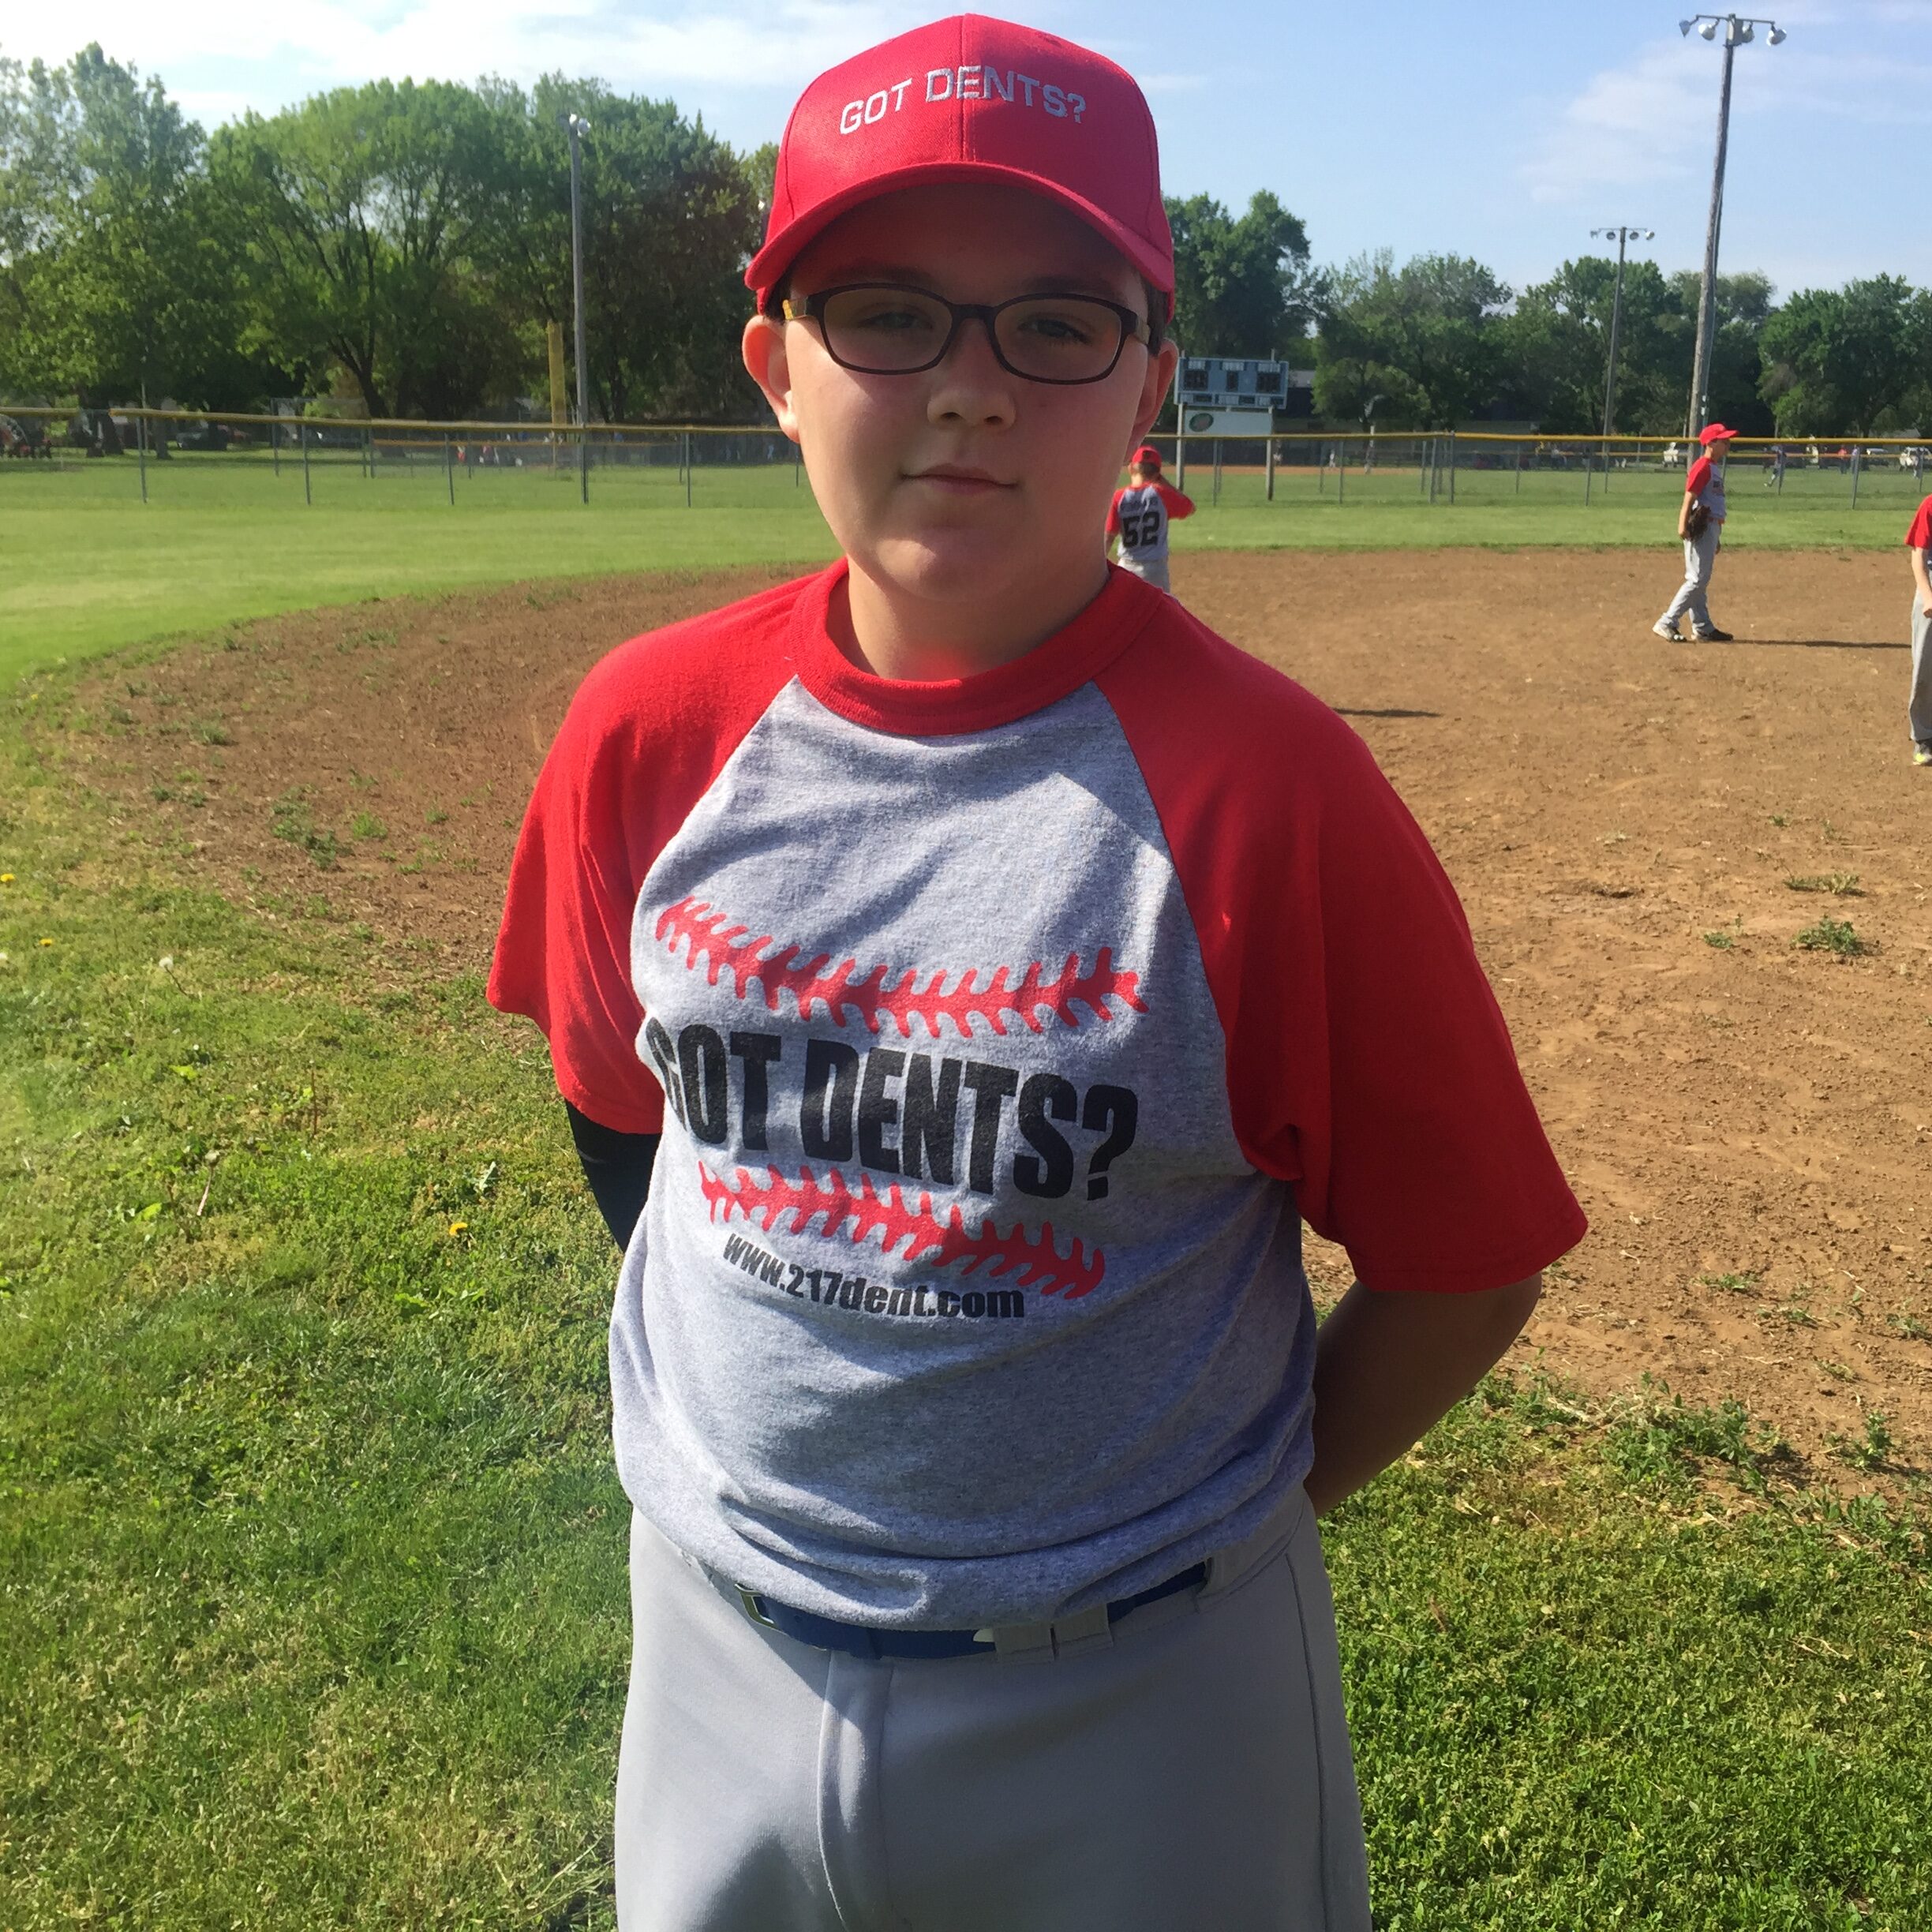 http://217dent.com 2016 Got Dents Springfield, IL Images baseball team sponsored